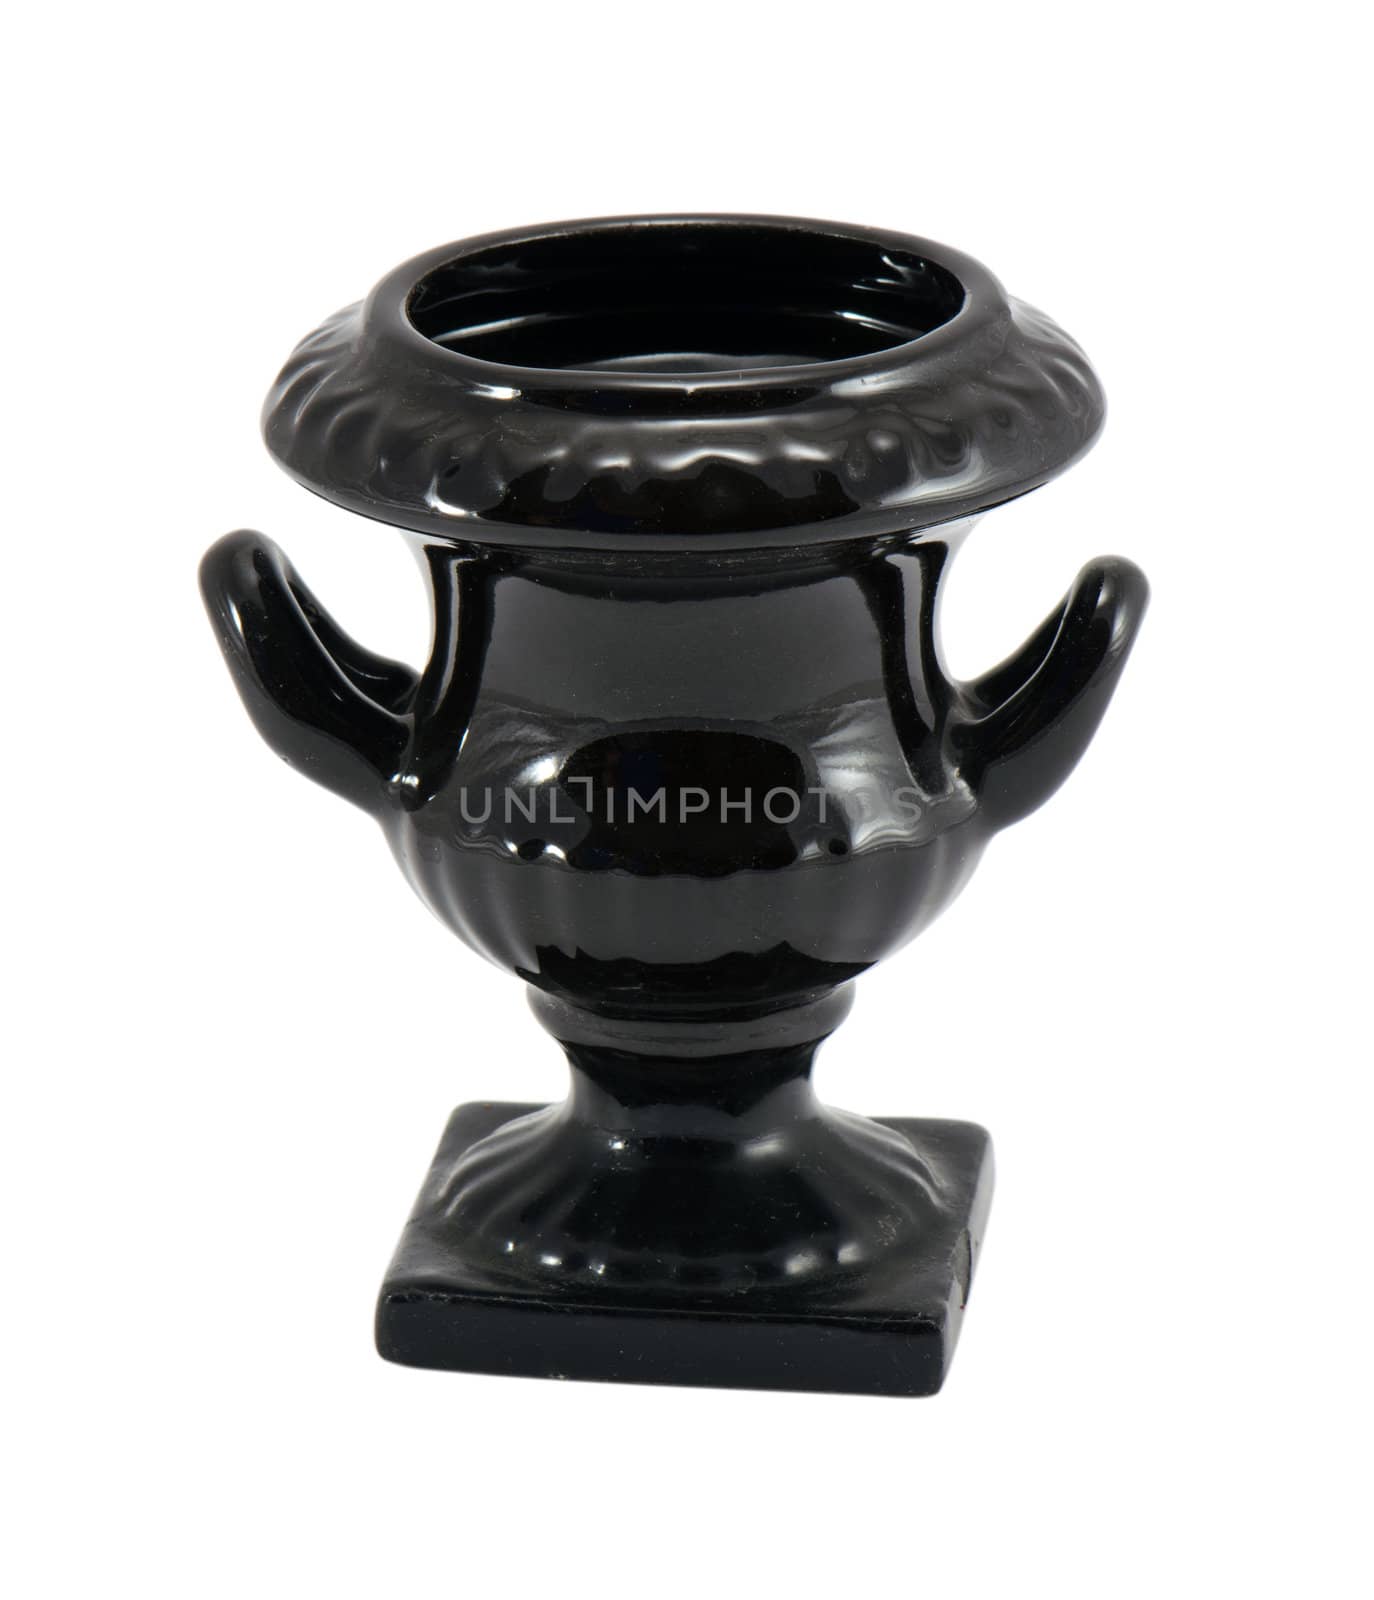 retro ceramic black vase with two handle isolated on white background.